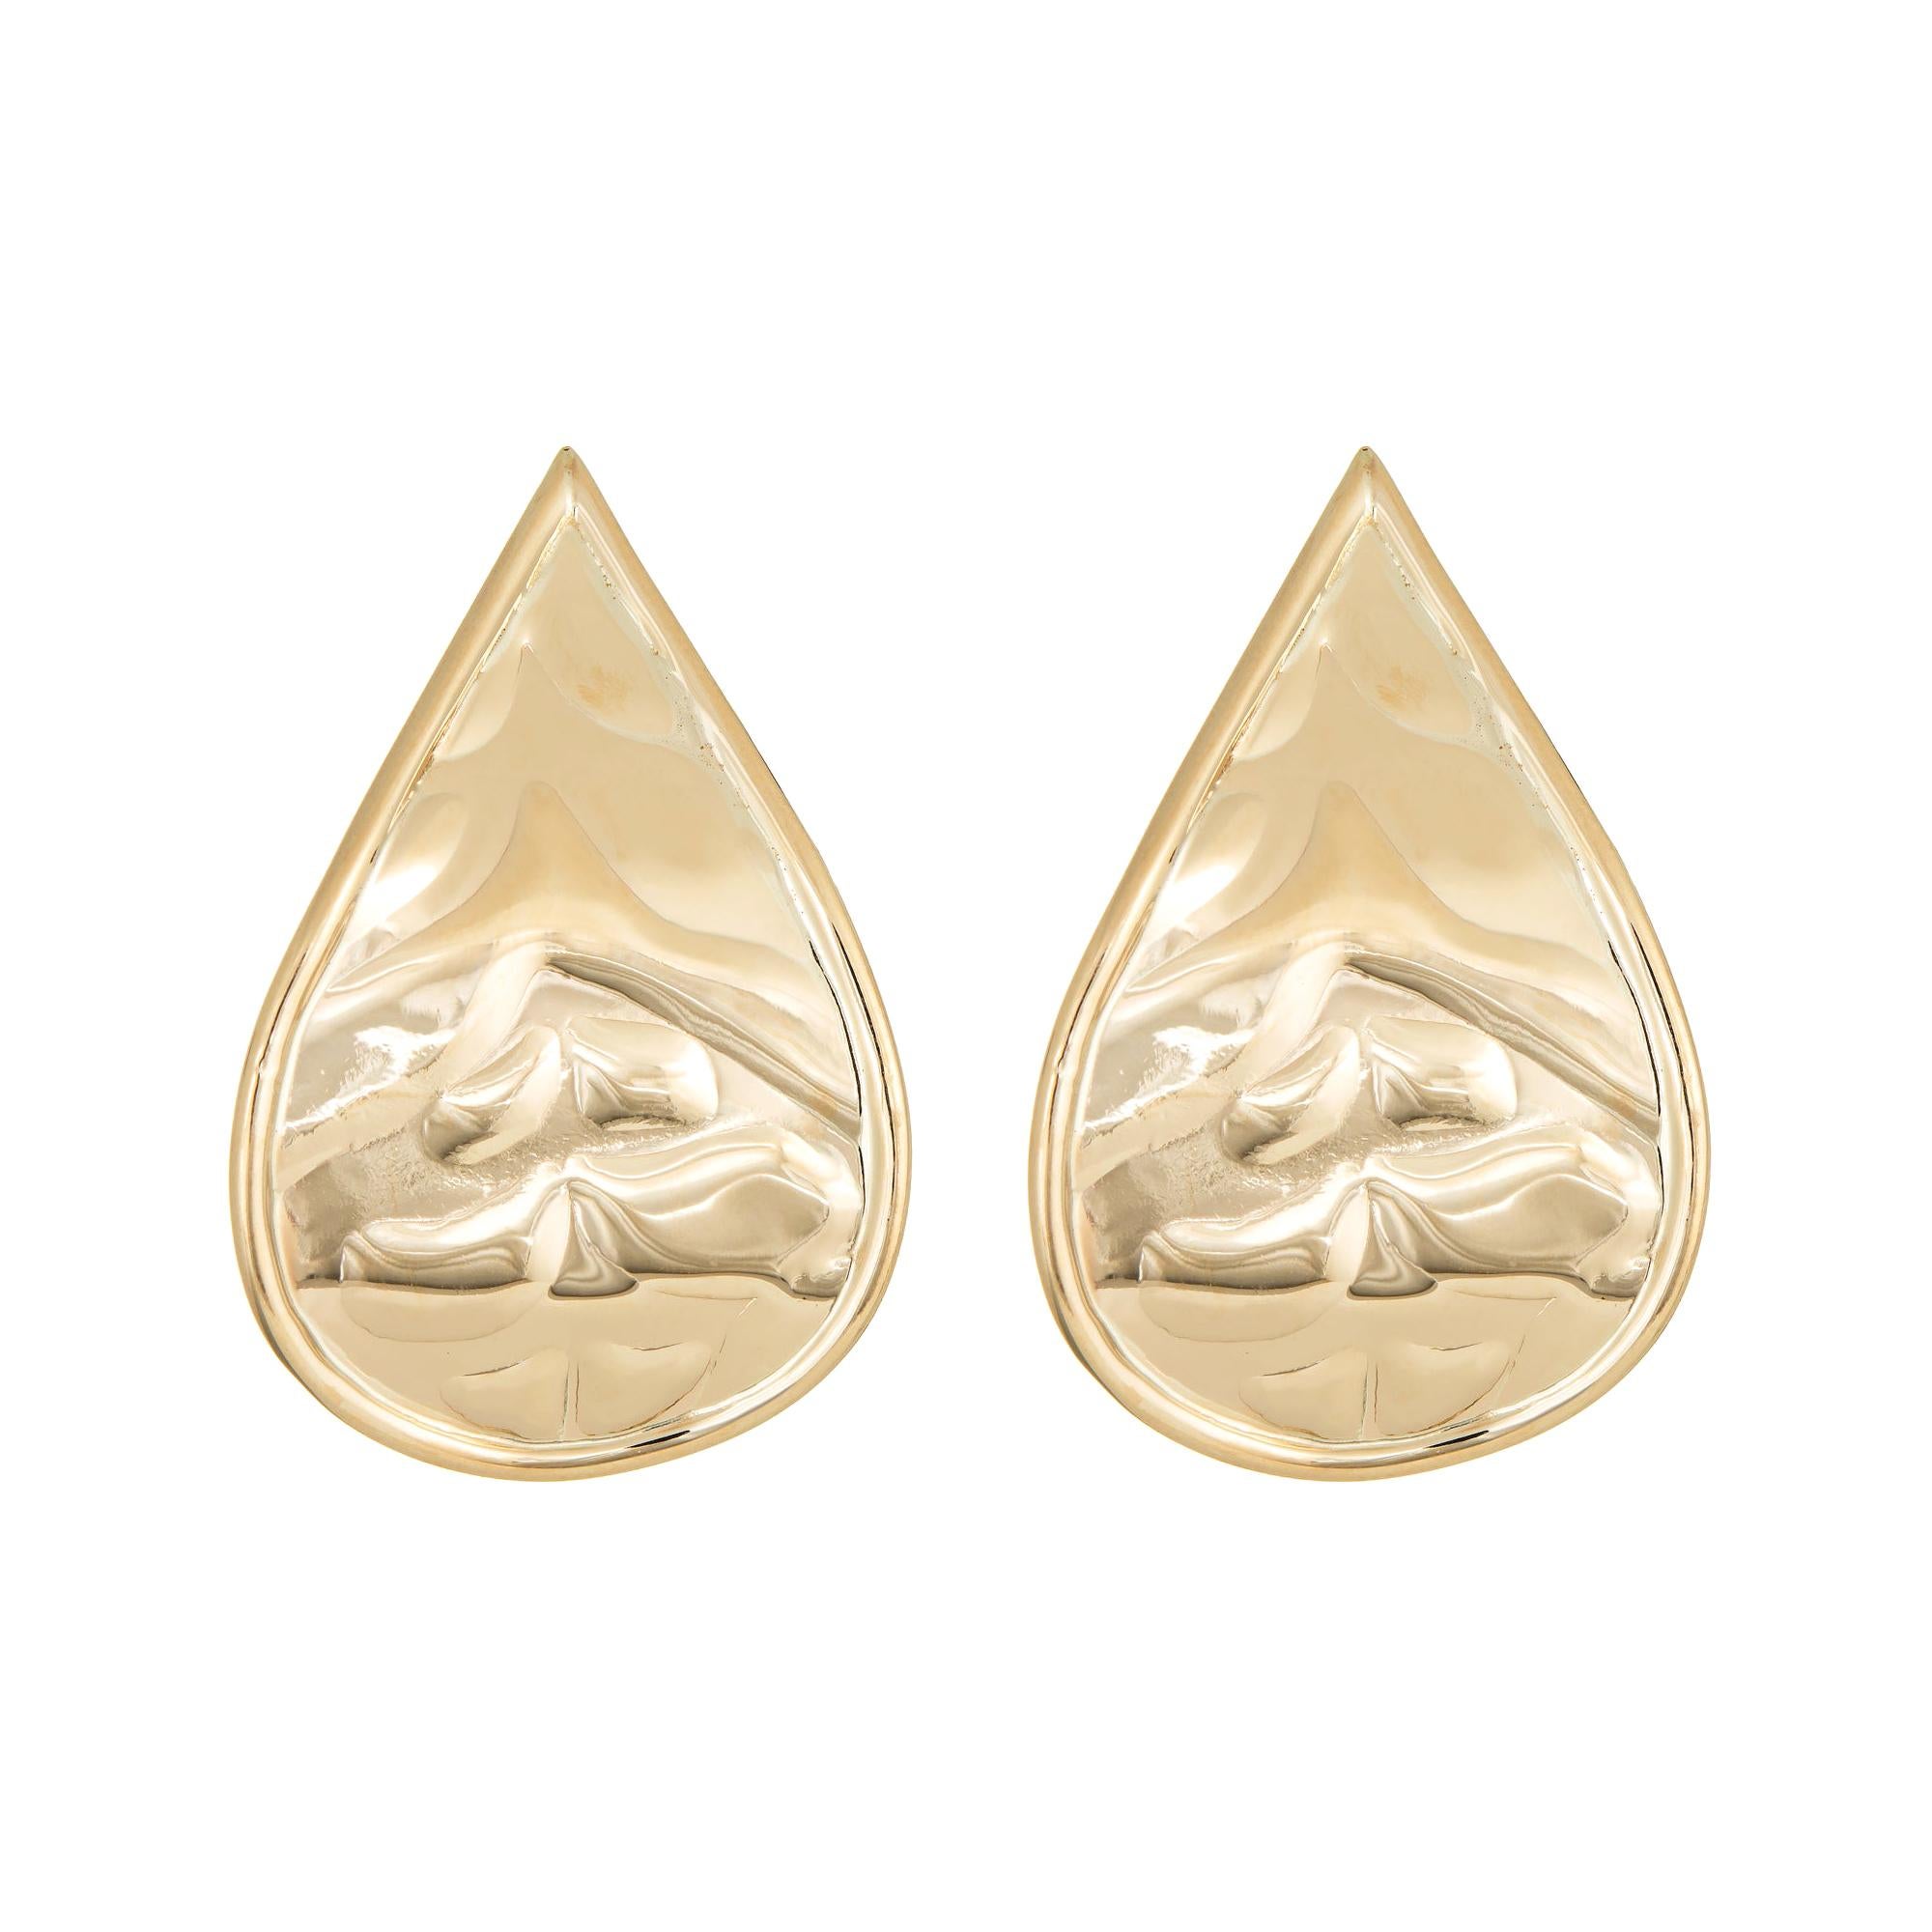 Vintage Concave Earrings 14 Karat Yellow Gold Large Pear Shaped Teardrop Jewelry